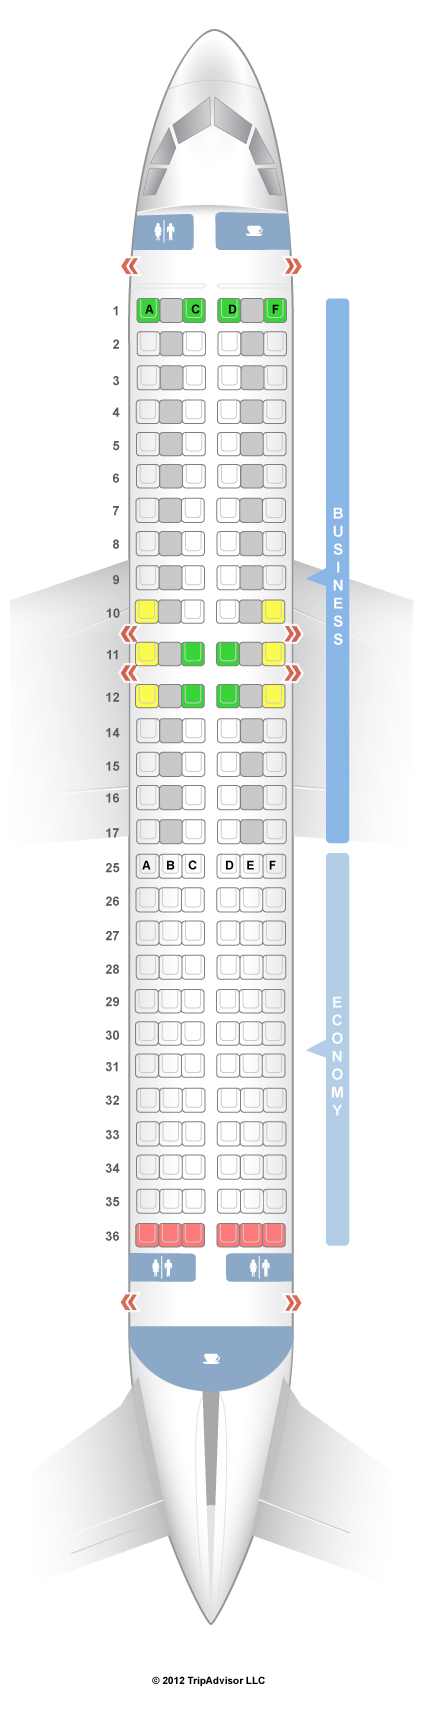 Air Canada Flight 1831 Seating Chart